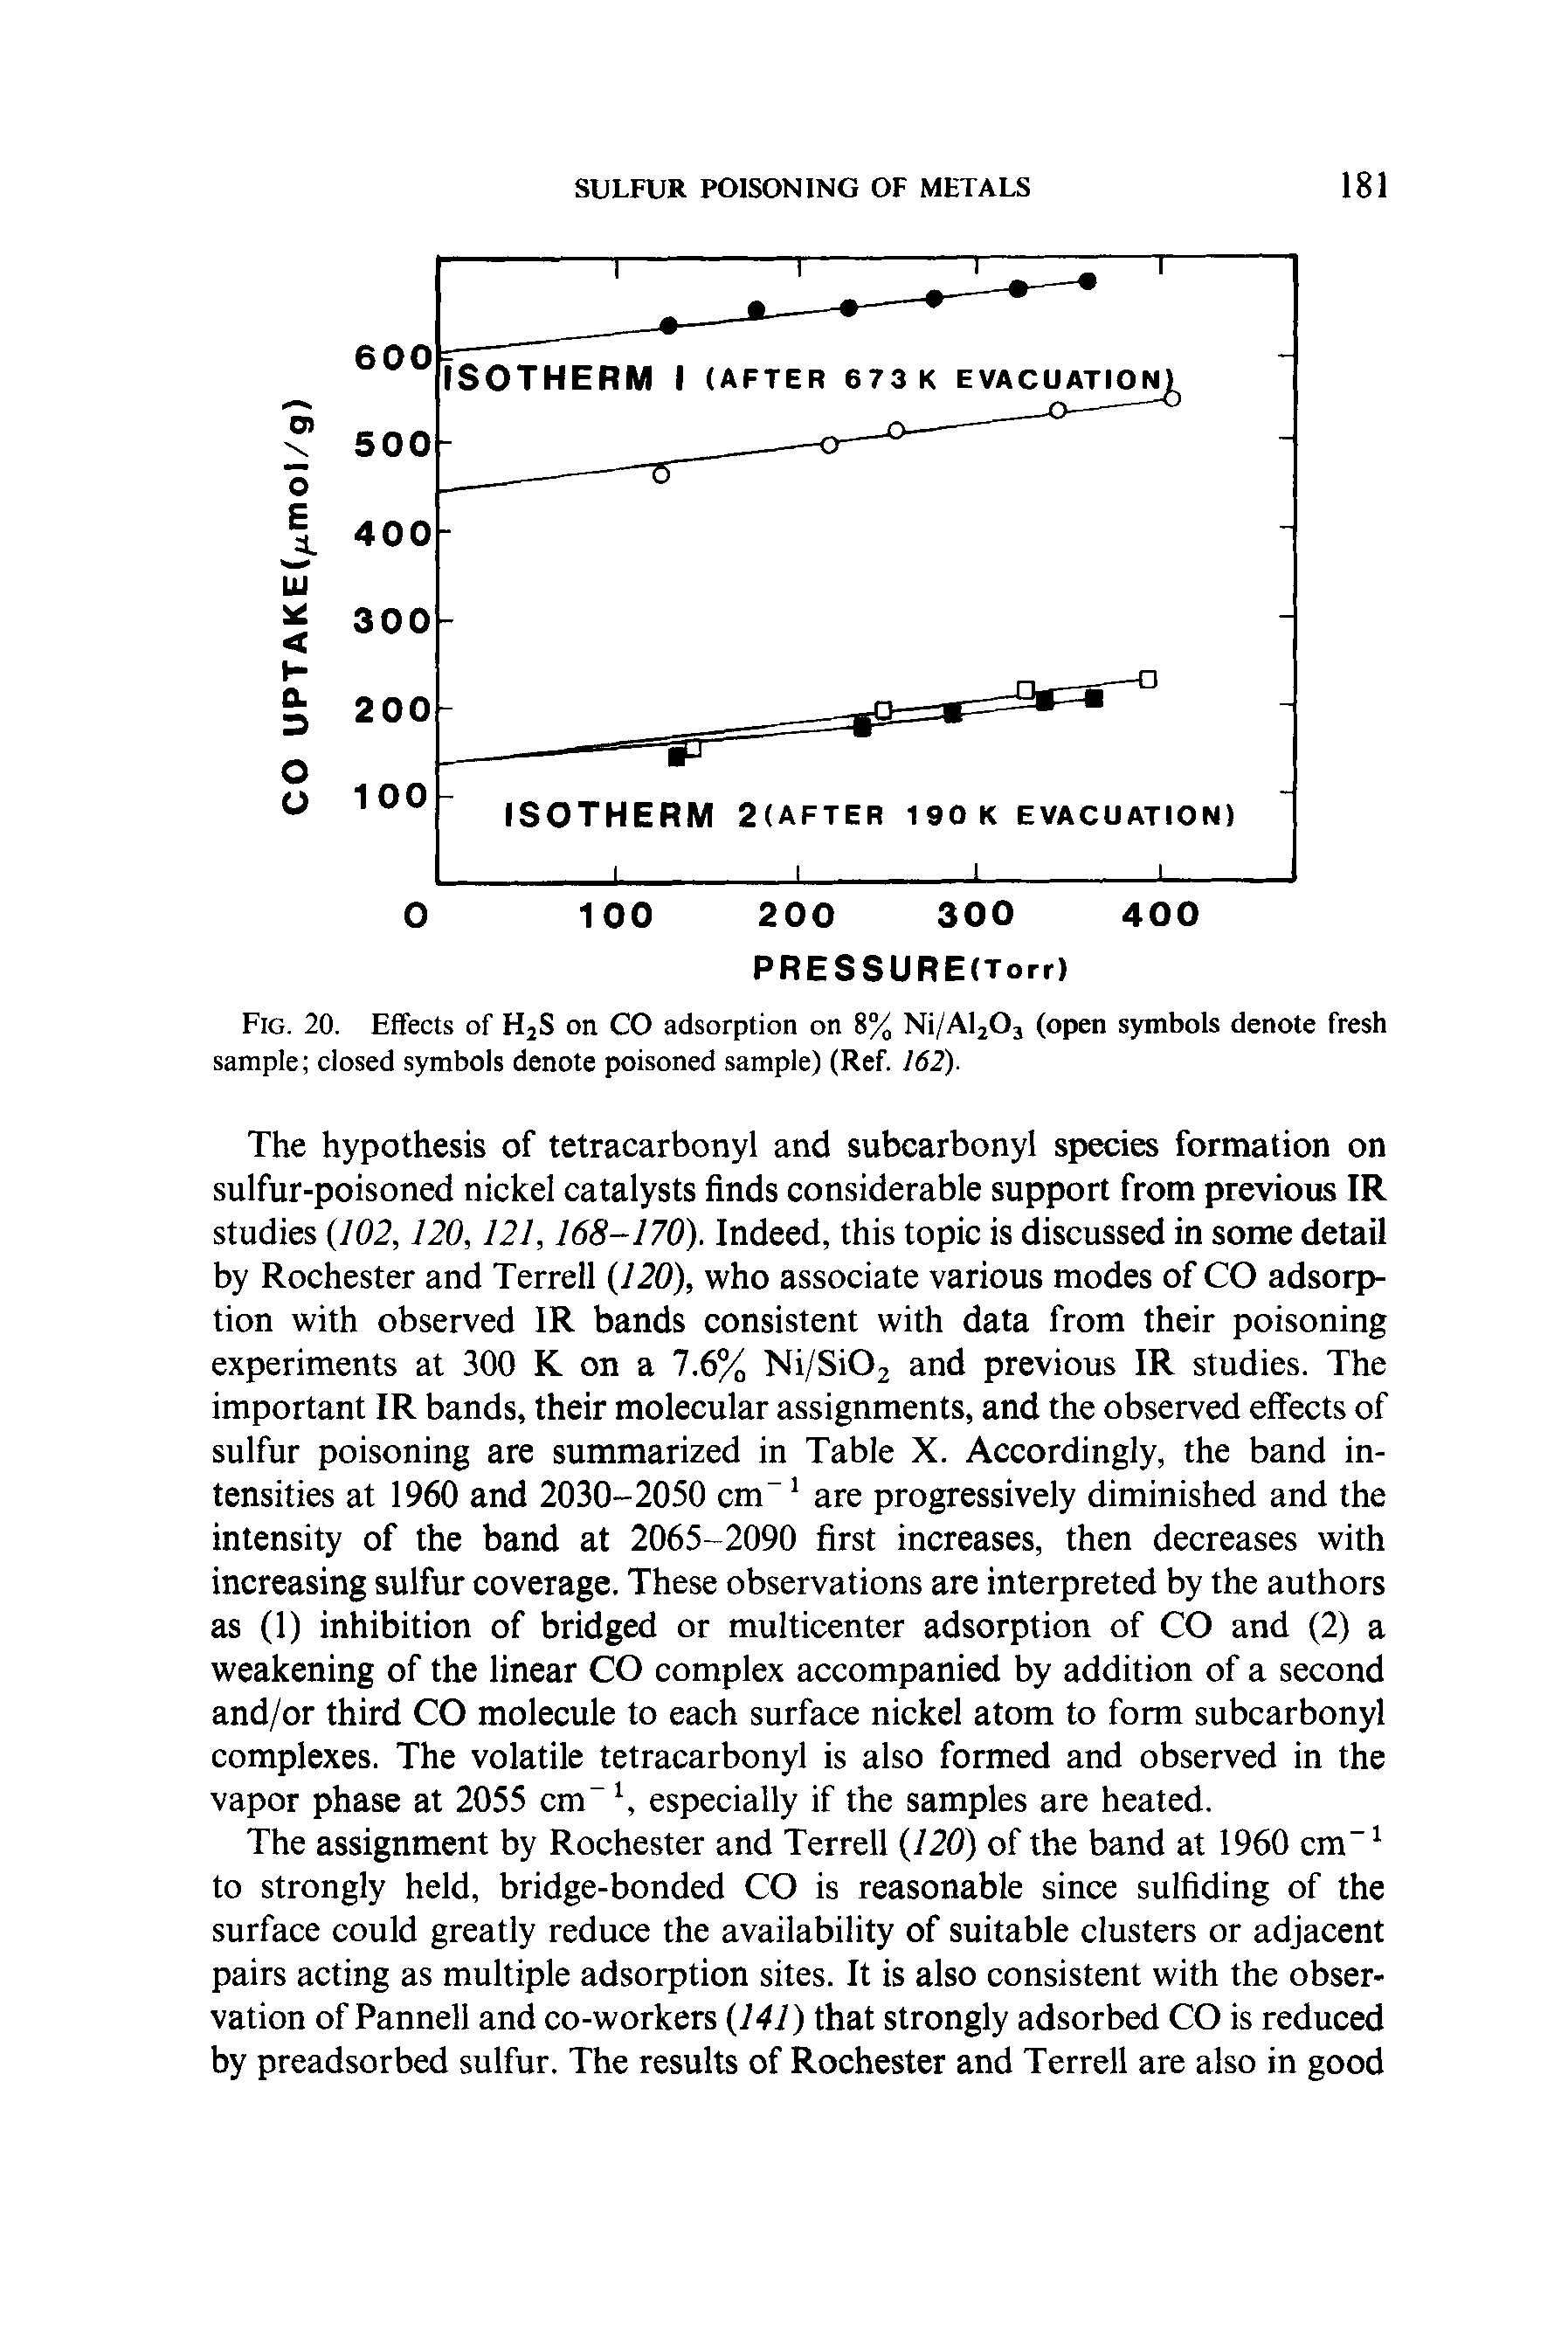 Fig. 20. Effects of H2S on CO adsorption on 8% Ni/Al203 (open symbols denote fresh sample closed symbols denote poisoned sample) (Ref. 162).